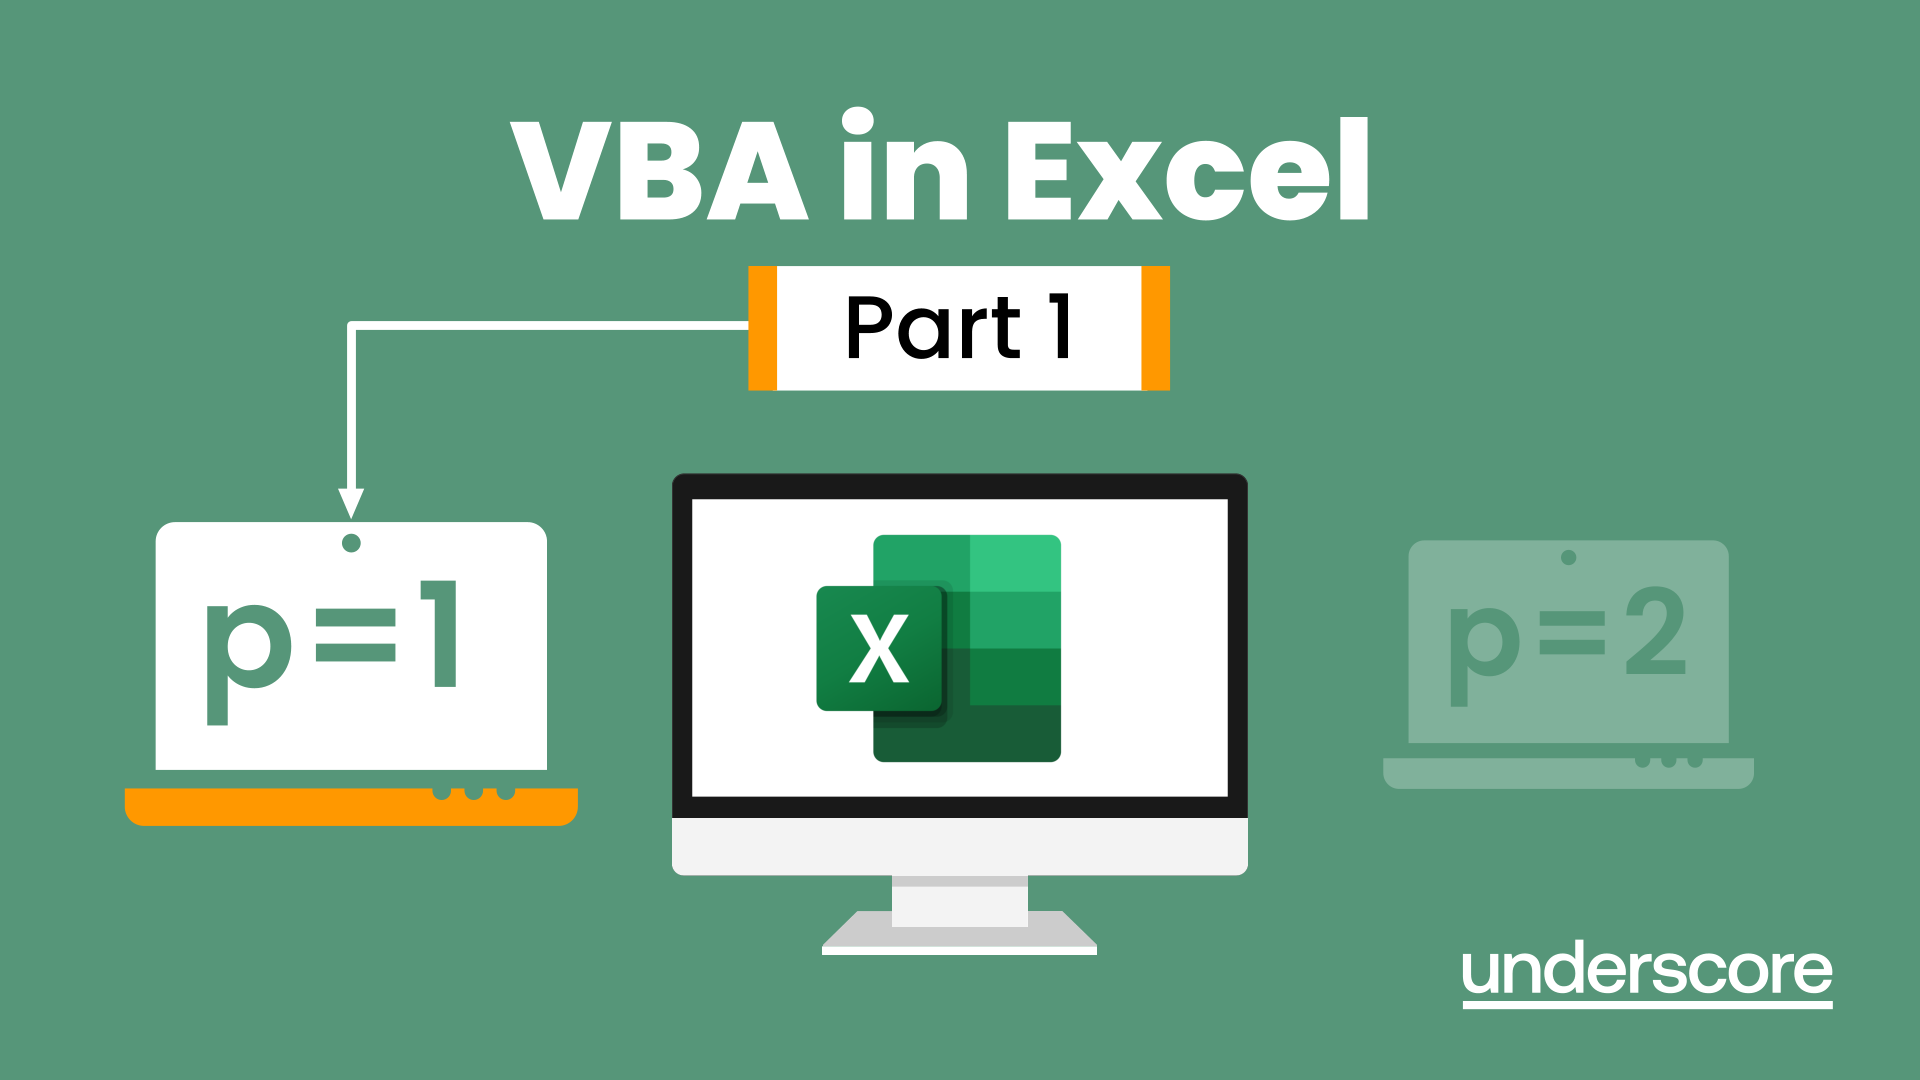 VBA in Excel - Part 1